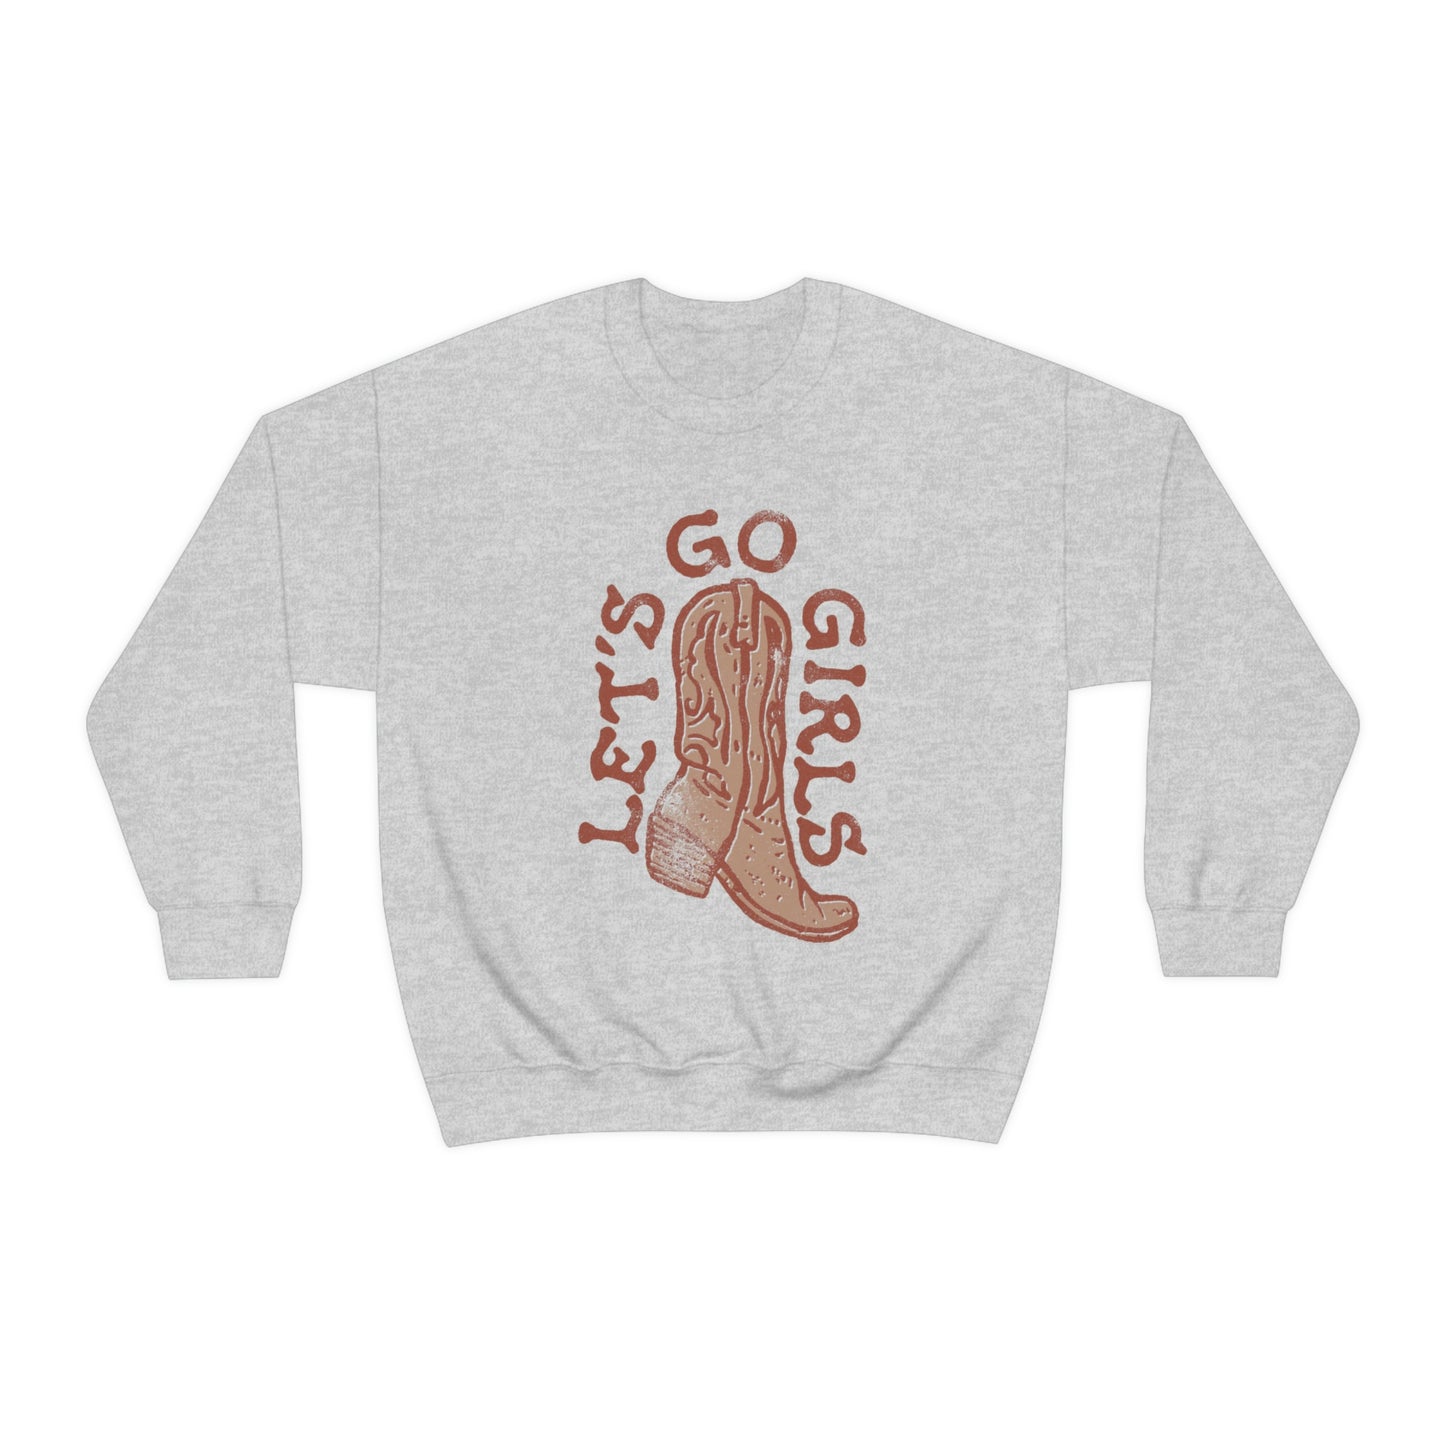 Lets Go Girls Cowboy Boot Sweatshirt